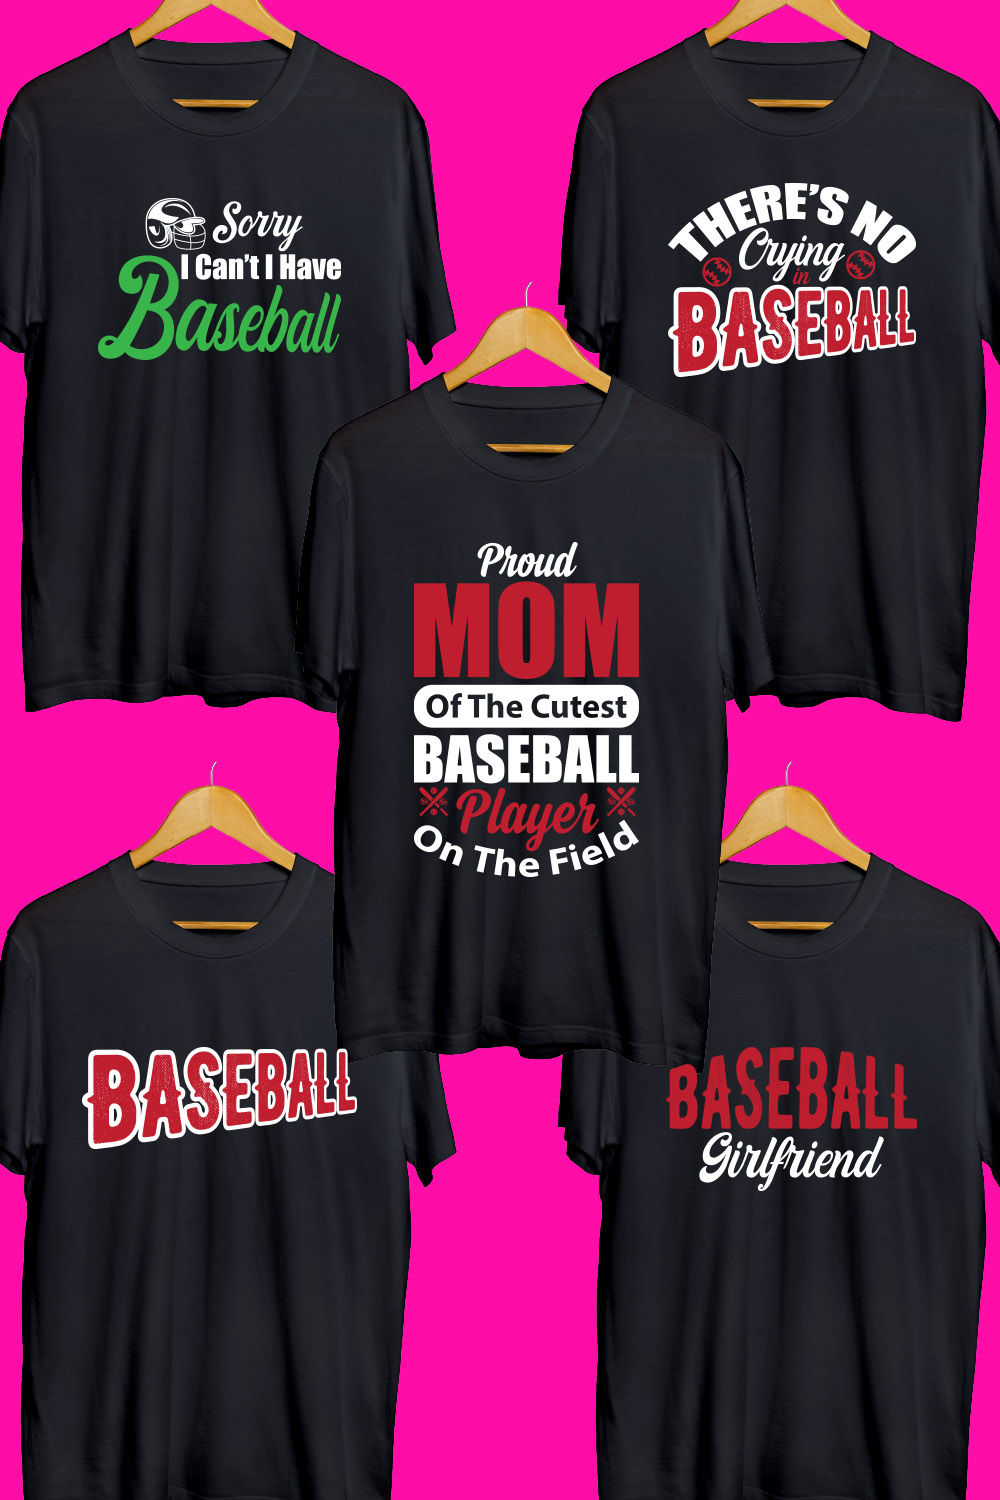 Baseball SVG T Shirt Designs Bundle pinterest preview image.